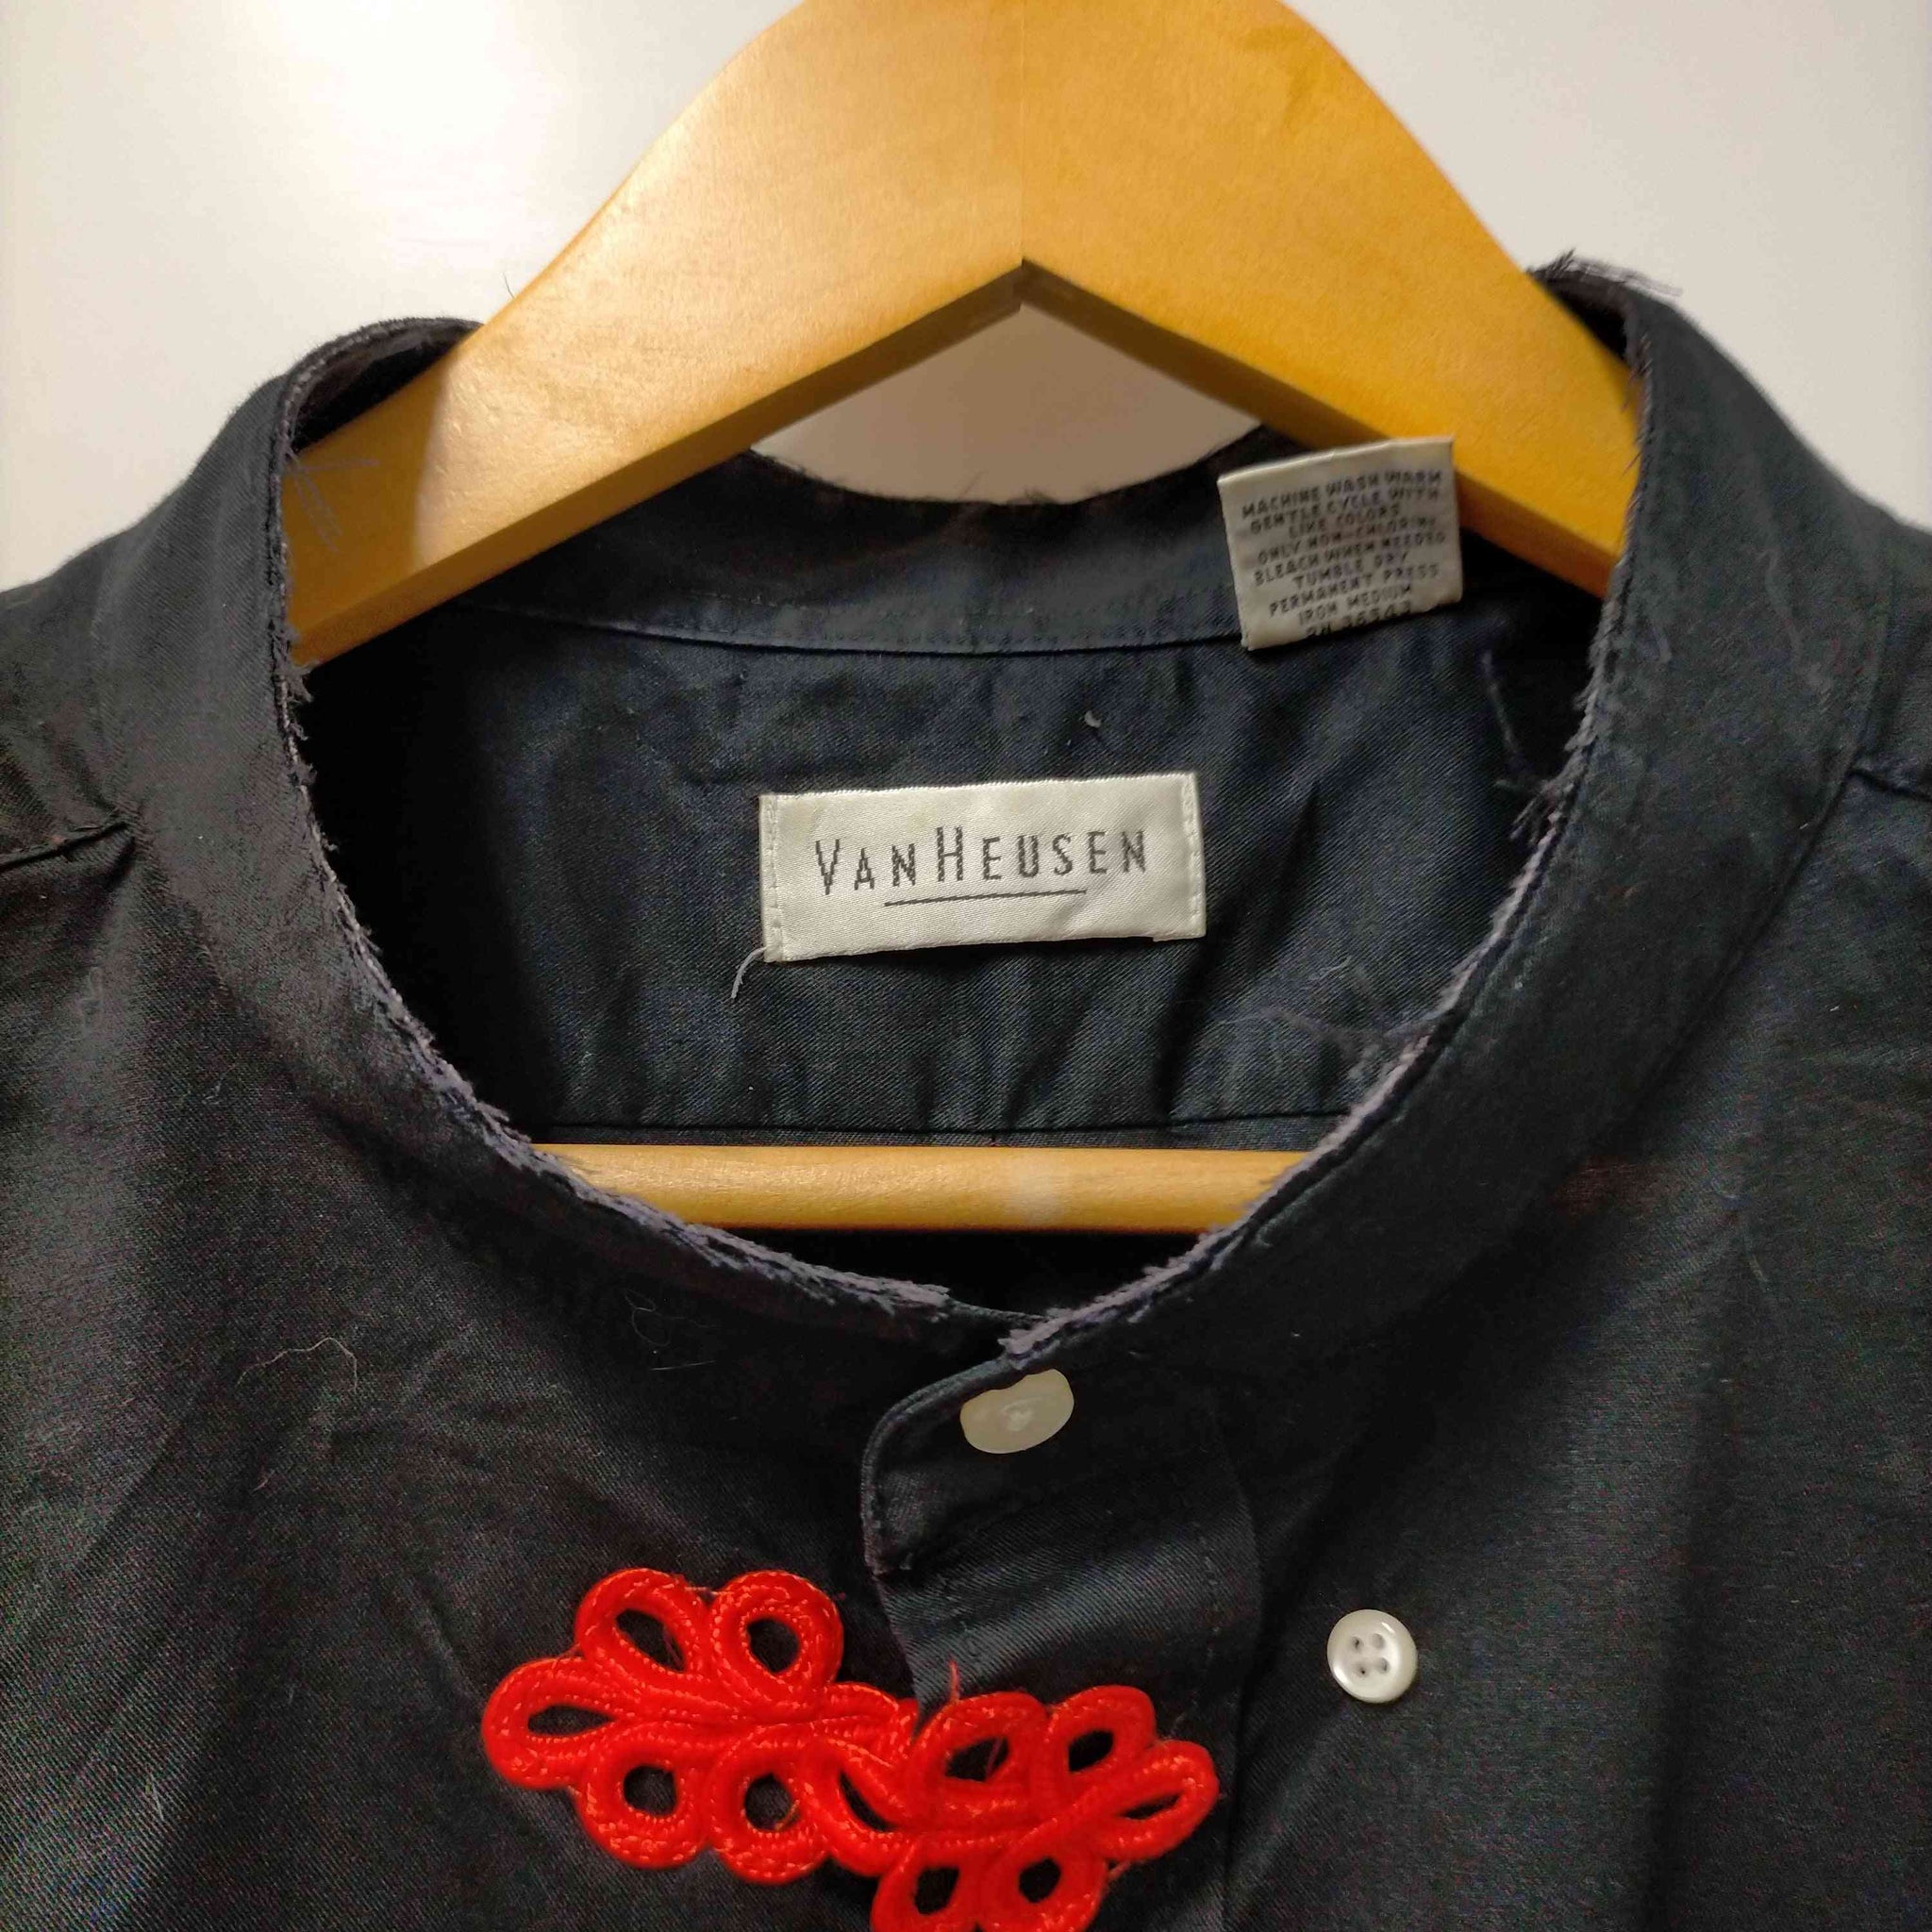 VANHEUSEN(ヴァンヒューゼン)90S デザイン 刺繍 バンドカラー L/S シャツ